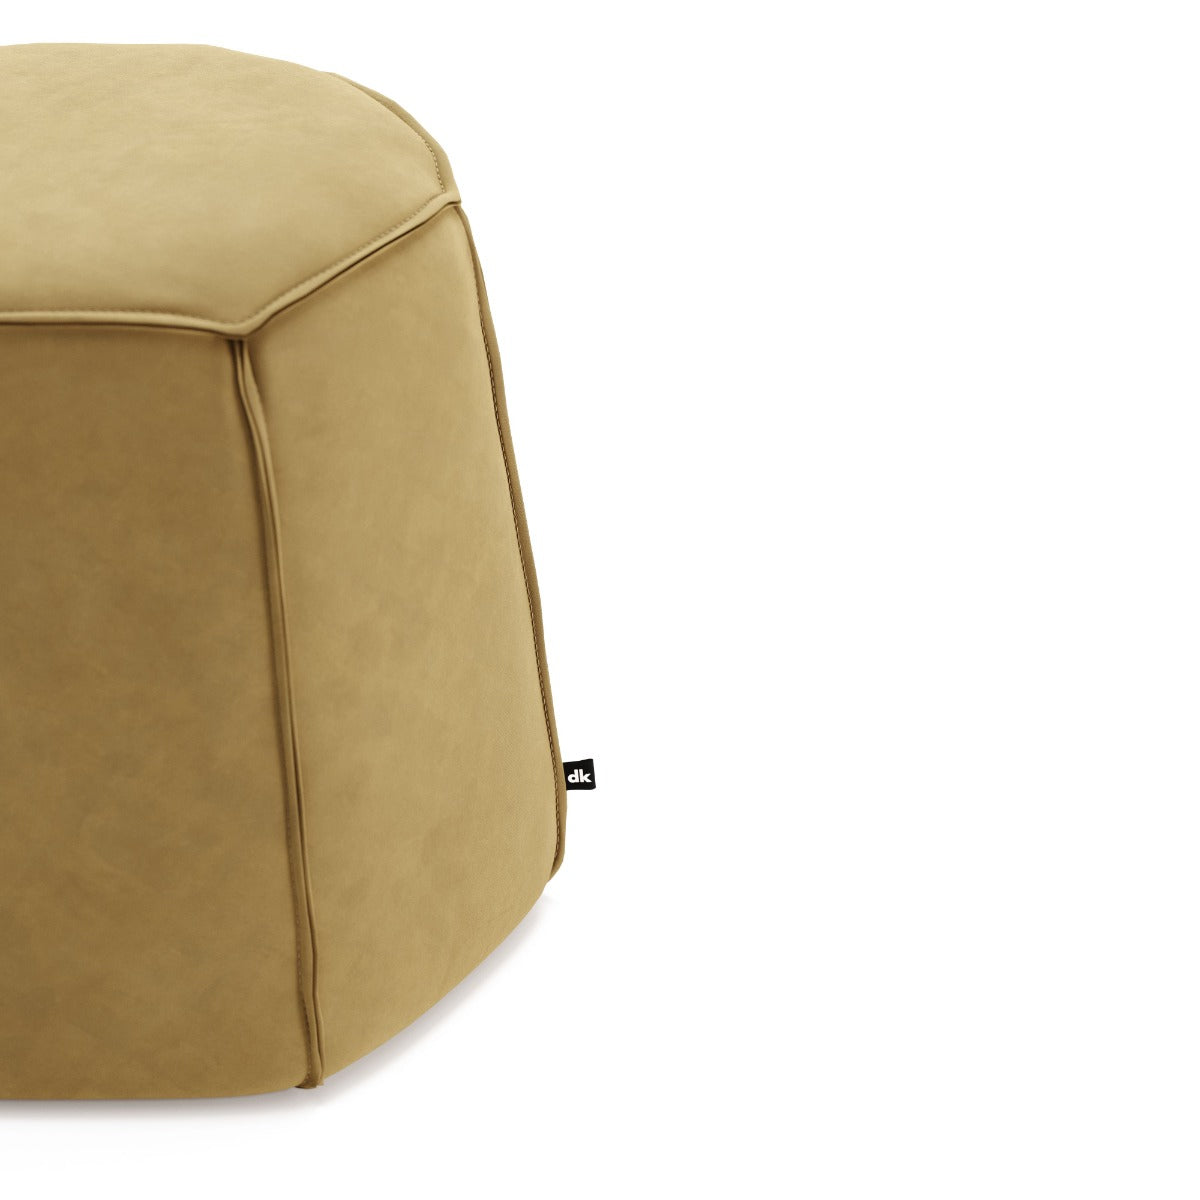 Domkapa Angles Pouffe - Customisable | Modern Furniture + Decor